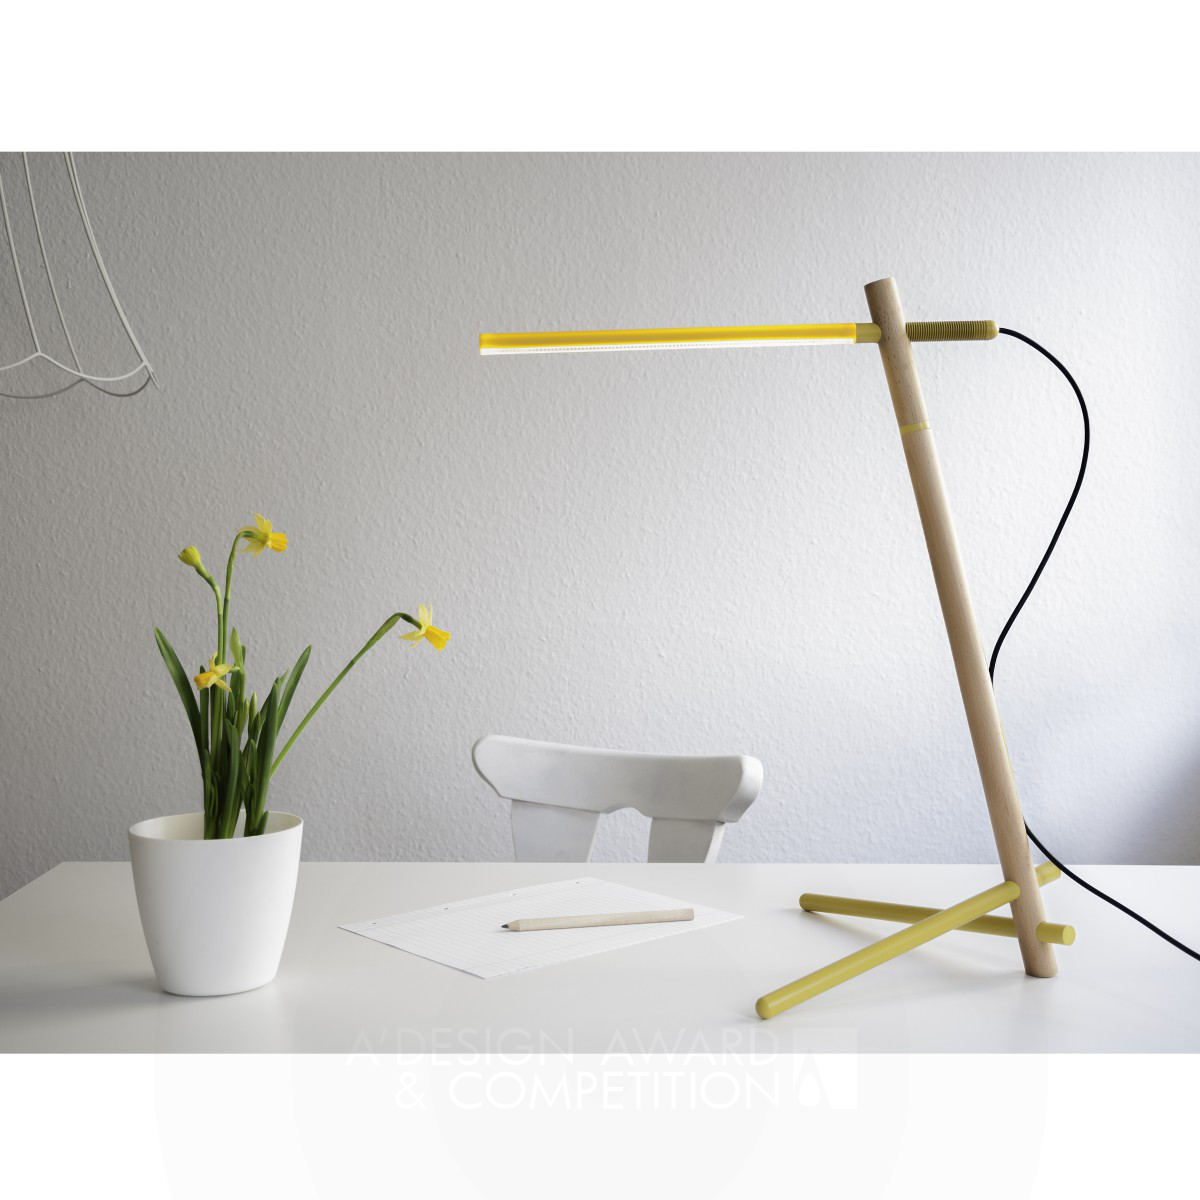 Structo Lamp by Curio Design